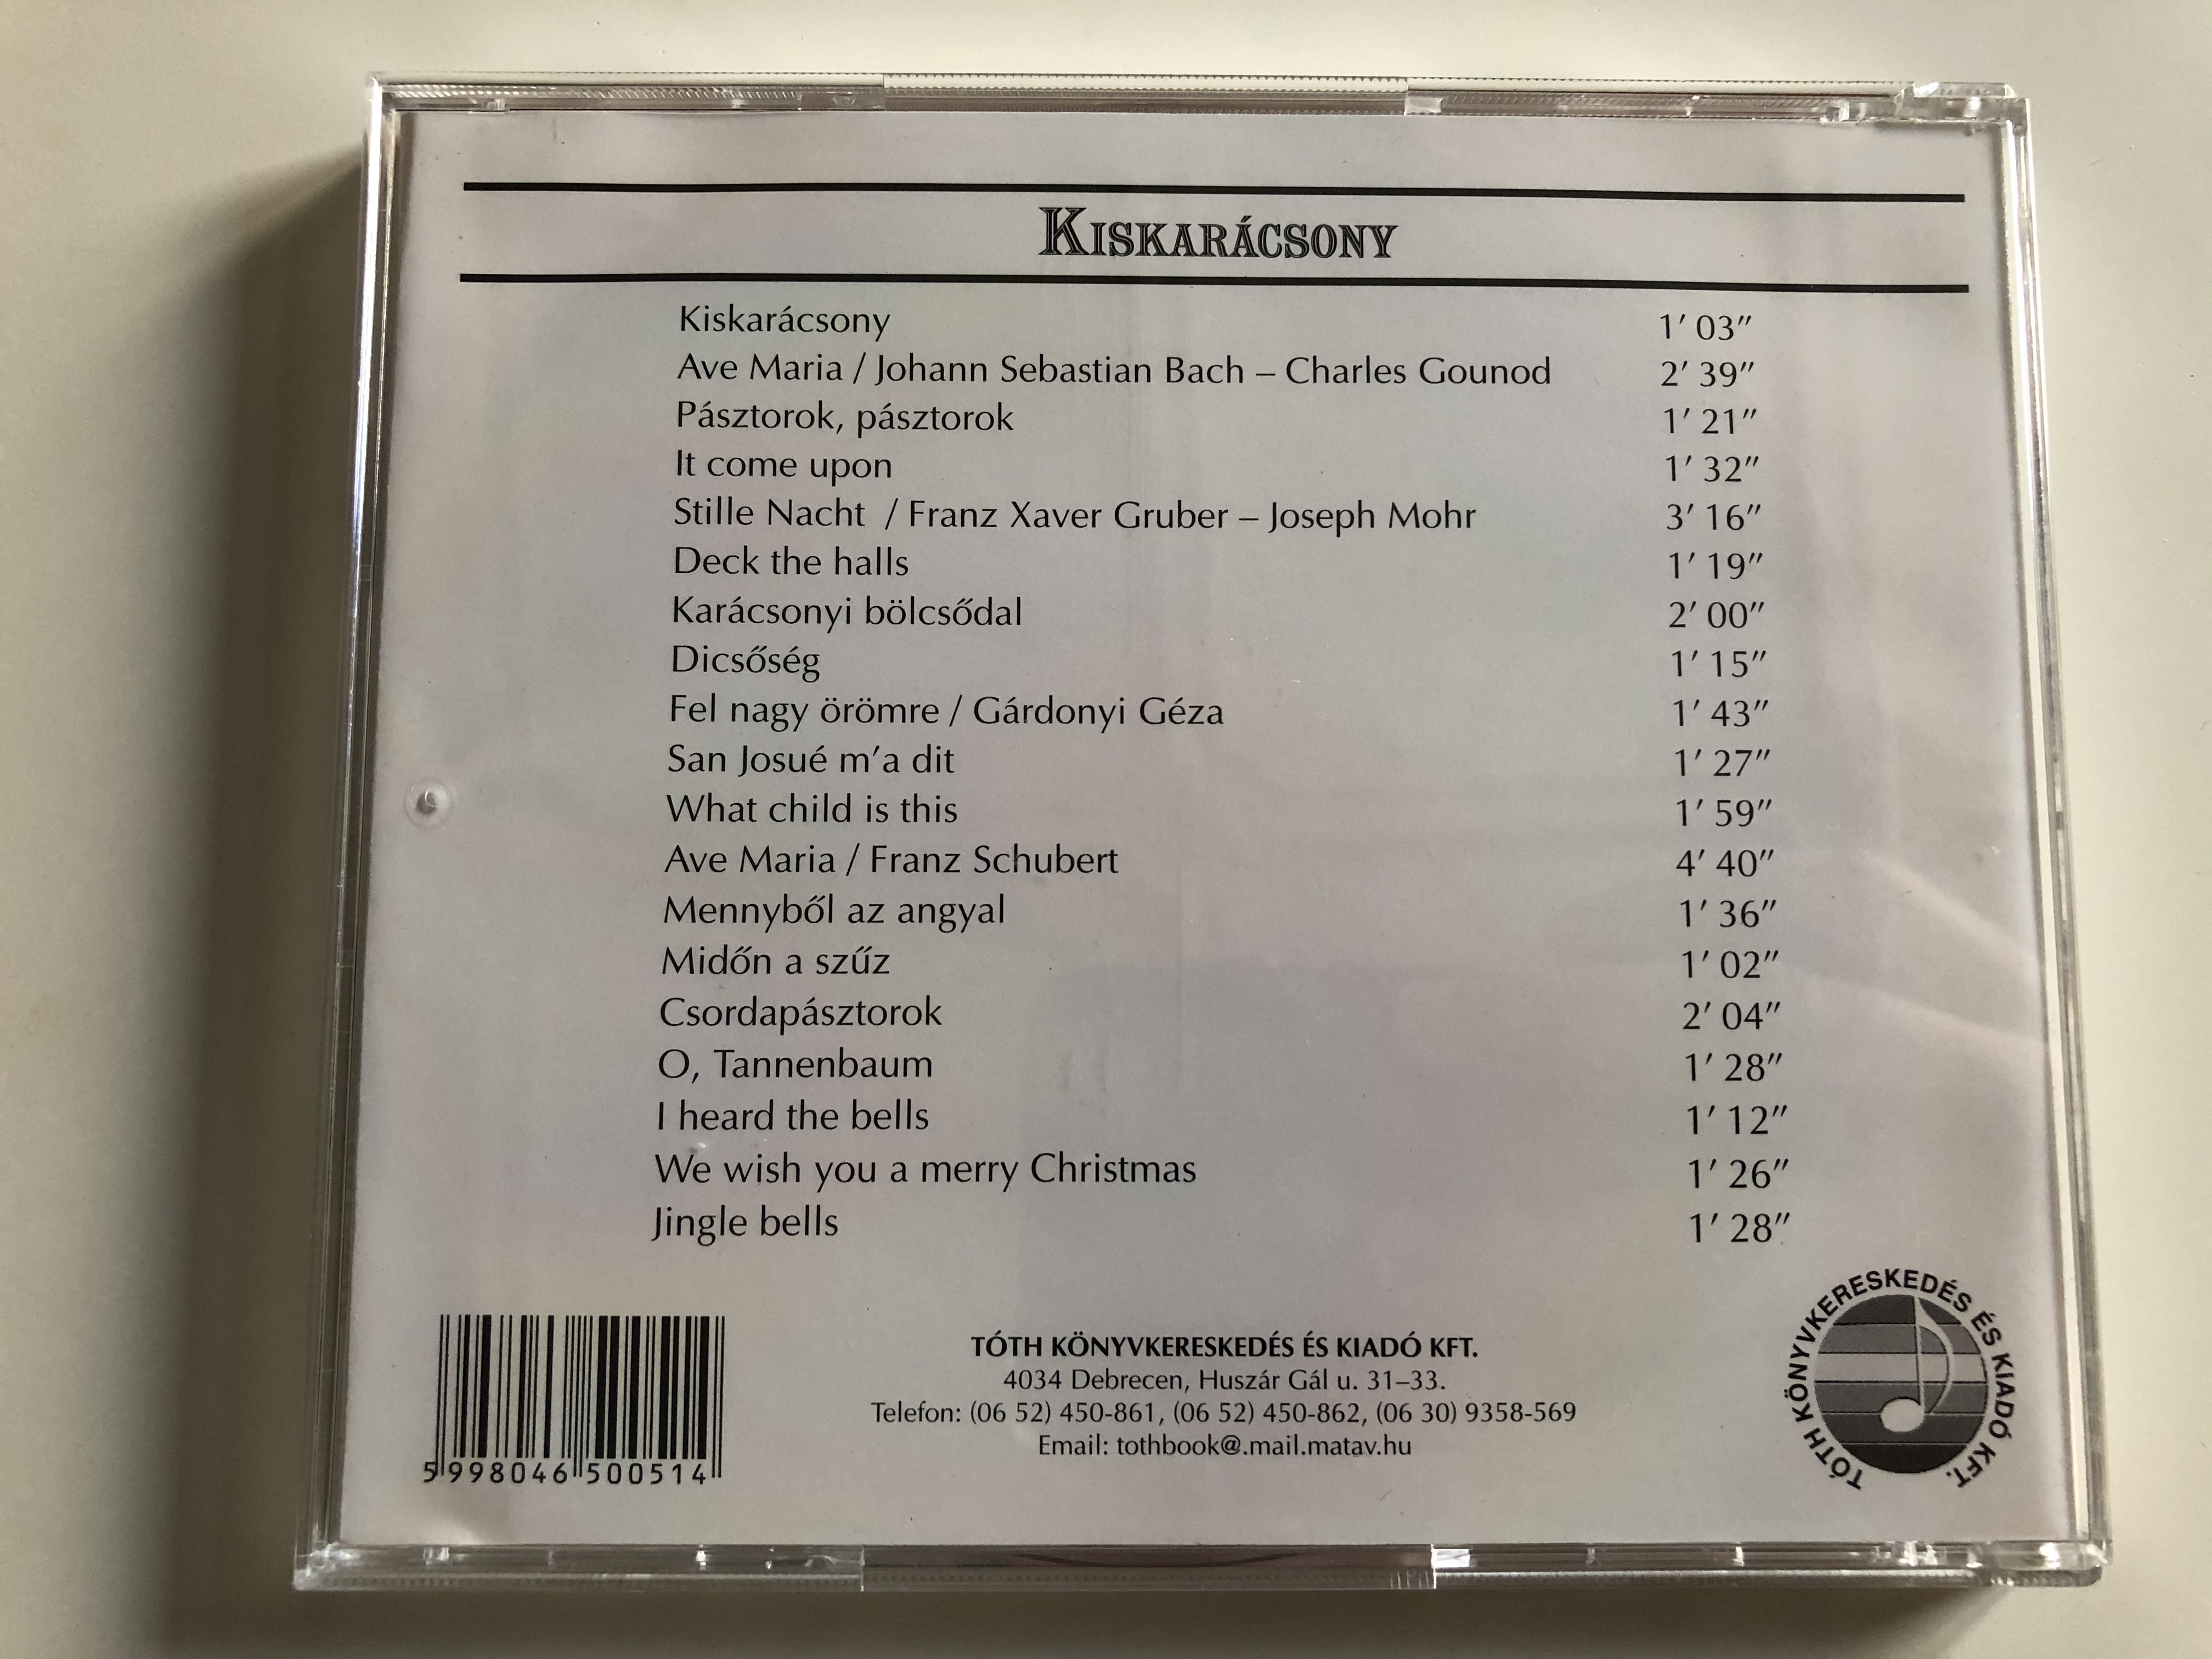 kiskaracsony-toth-konykereskedes-es-kiado-kft.-audio-cd-tkk-003-4-.jpg